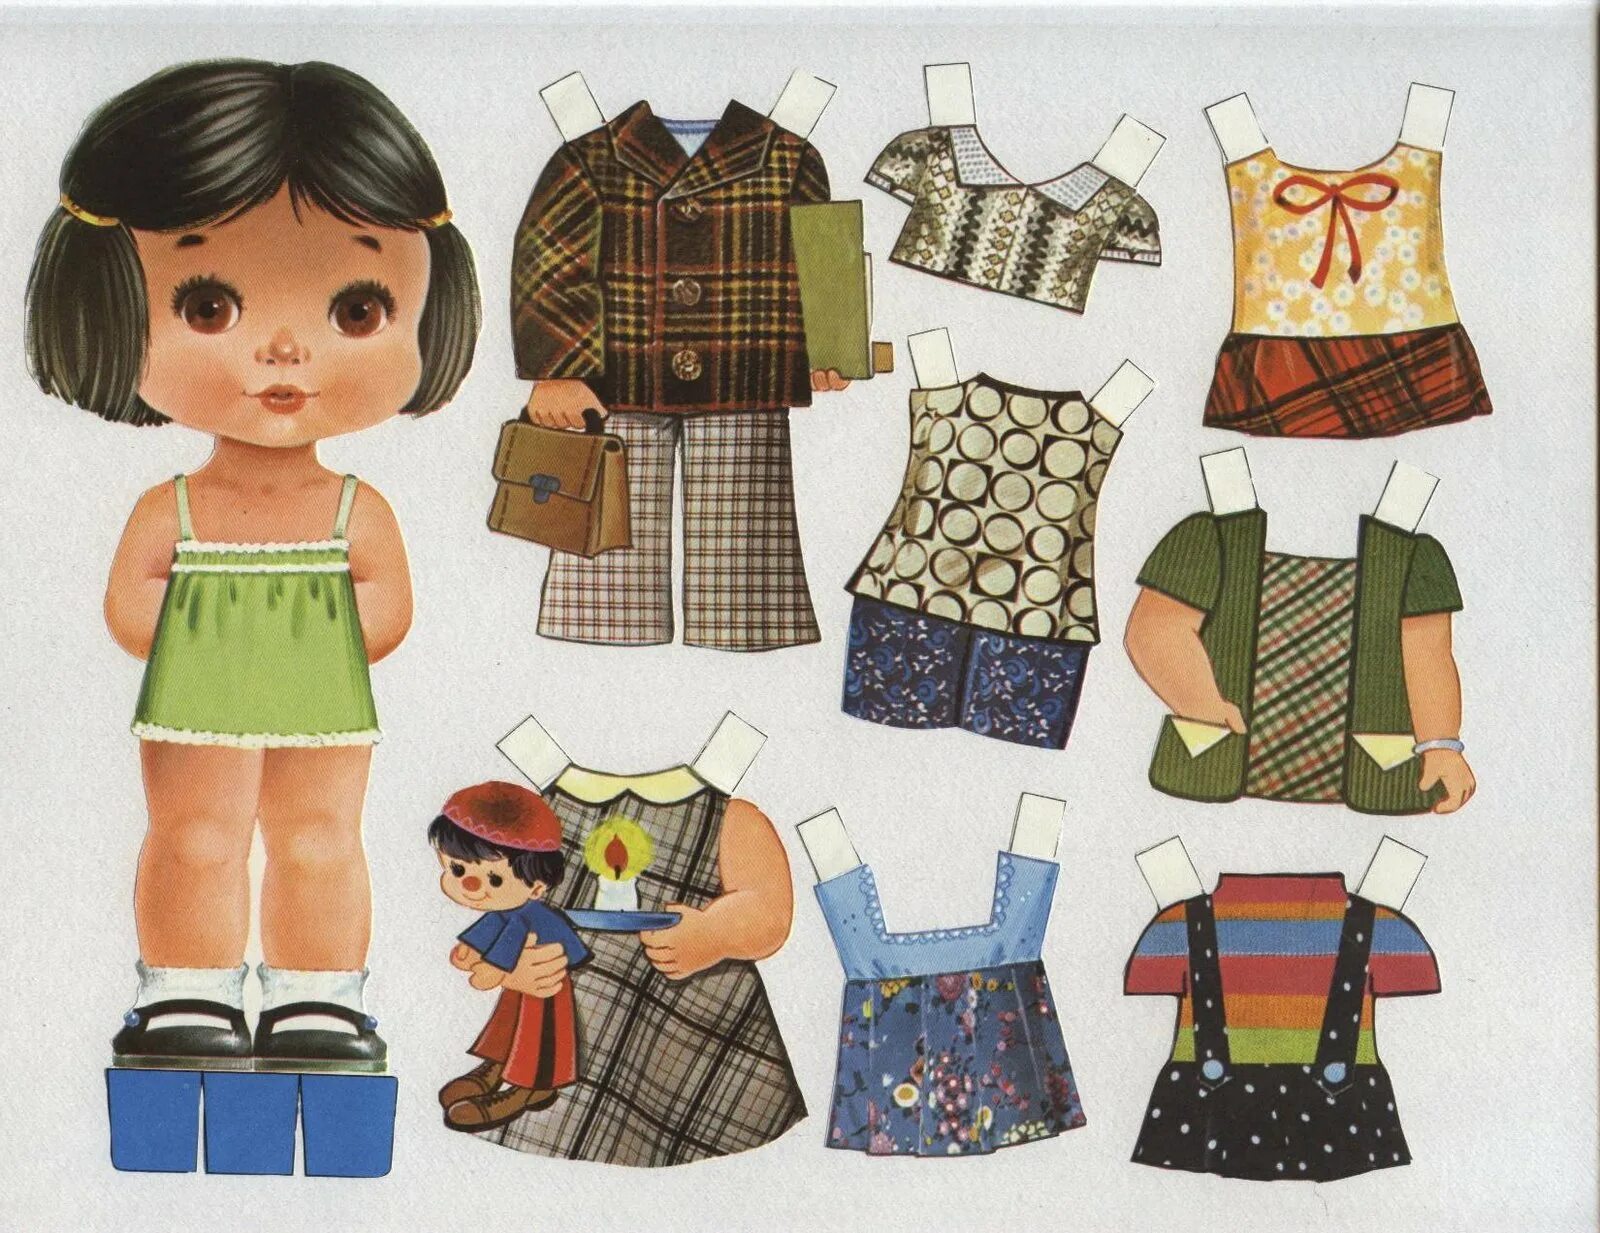 Одежда игра кукол. Бумажные куклы. Картонные куклы с одеждой. Бумажные куклы с одеждой. Одежда для кукол.